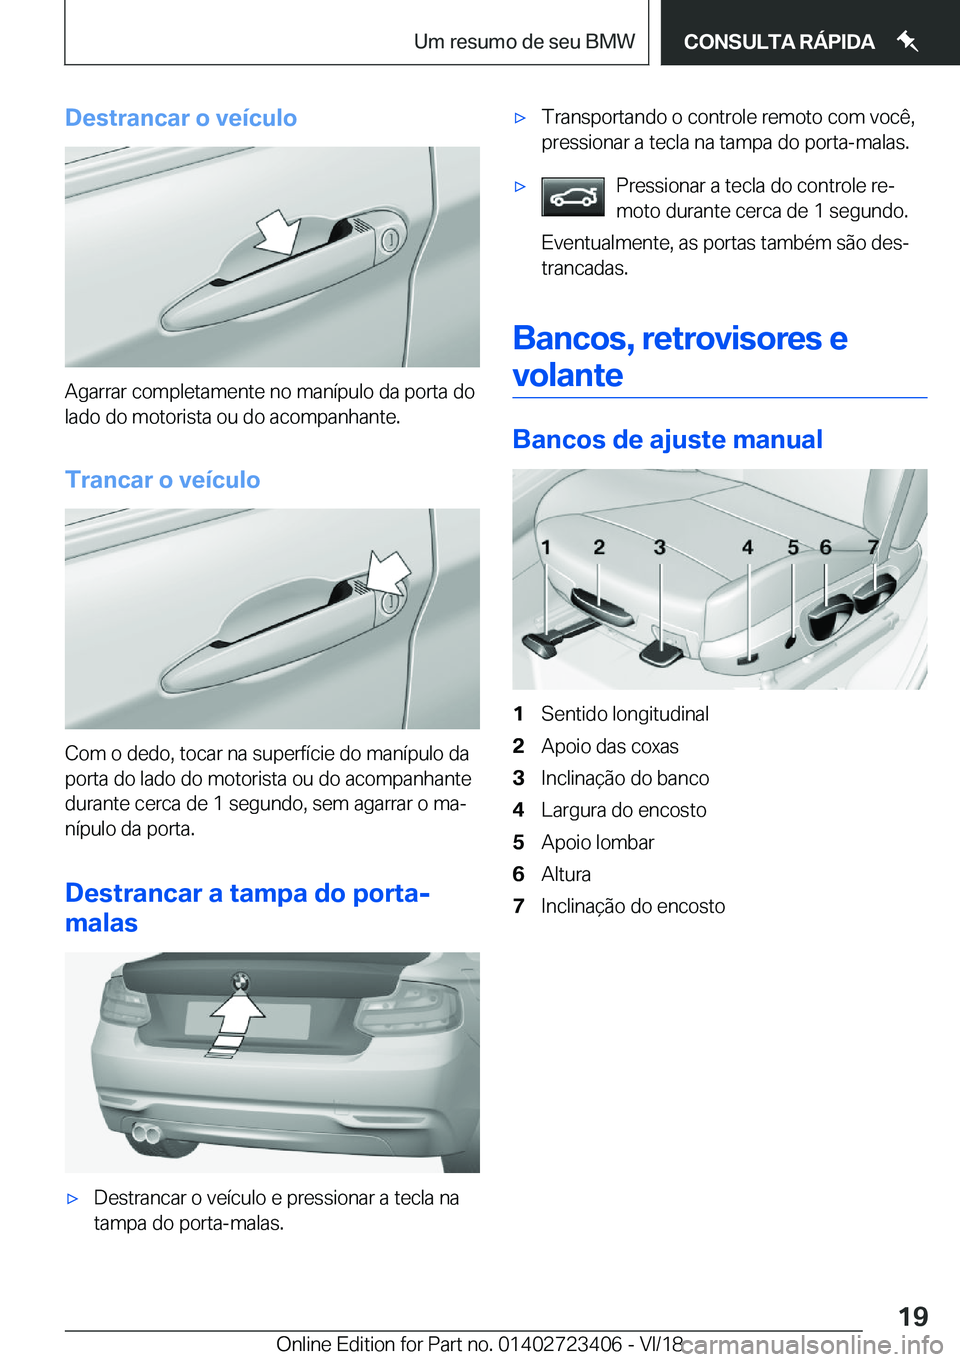 BMW 2 SERIES COUPE 2019  Manual do condutor (in Portuguese) �D�e�s�t�r�a�n�c�a�r��o��v�e�